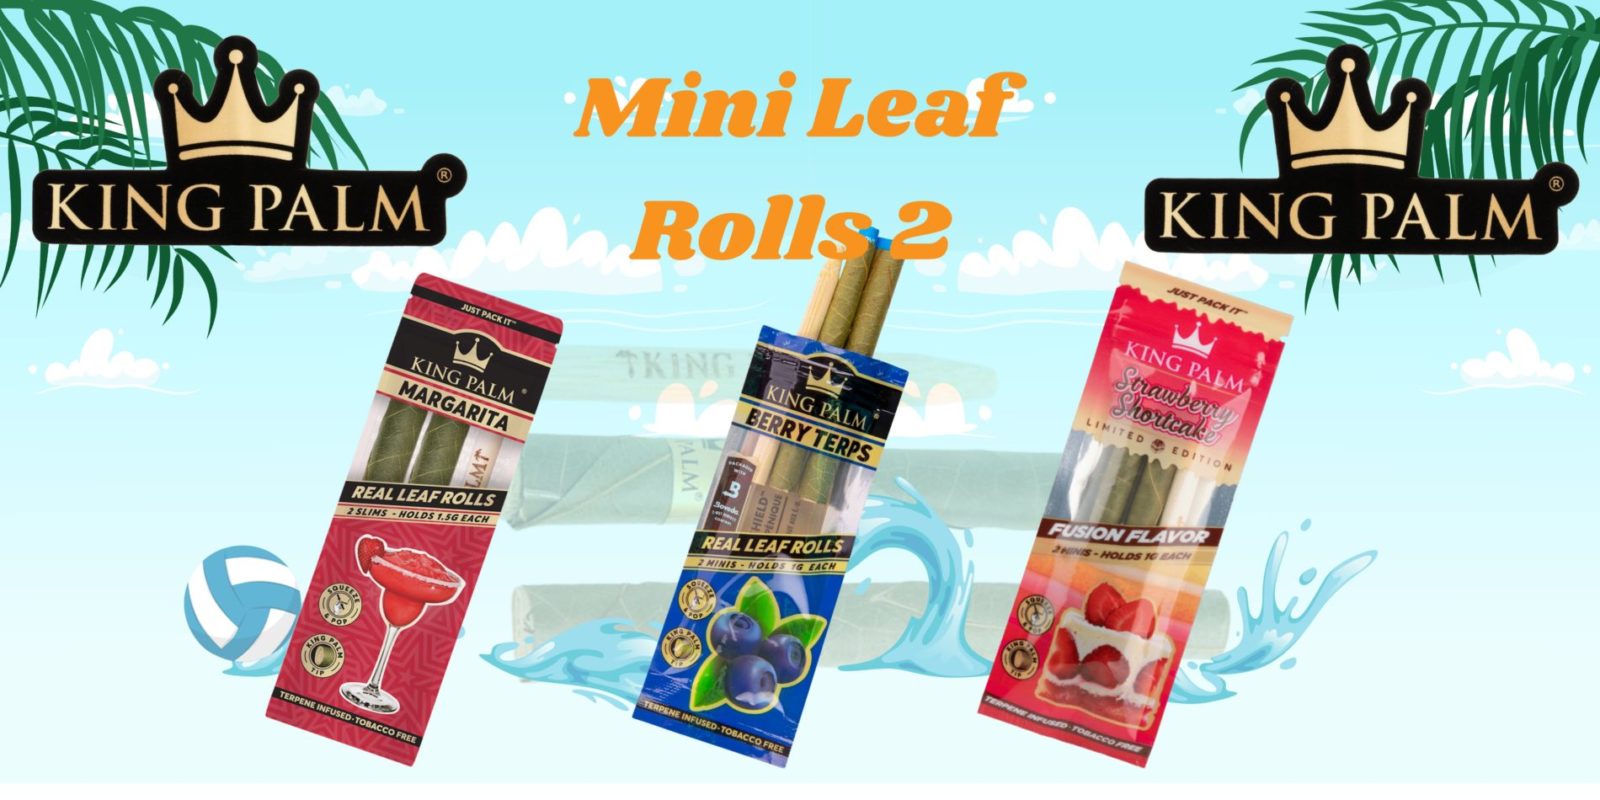 King Palm Mini Leaf Rolls 2 – Berry Terps 420 SUPPLIES - XMANIA Ireland 13